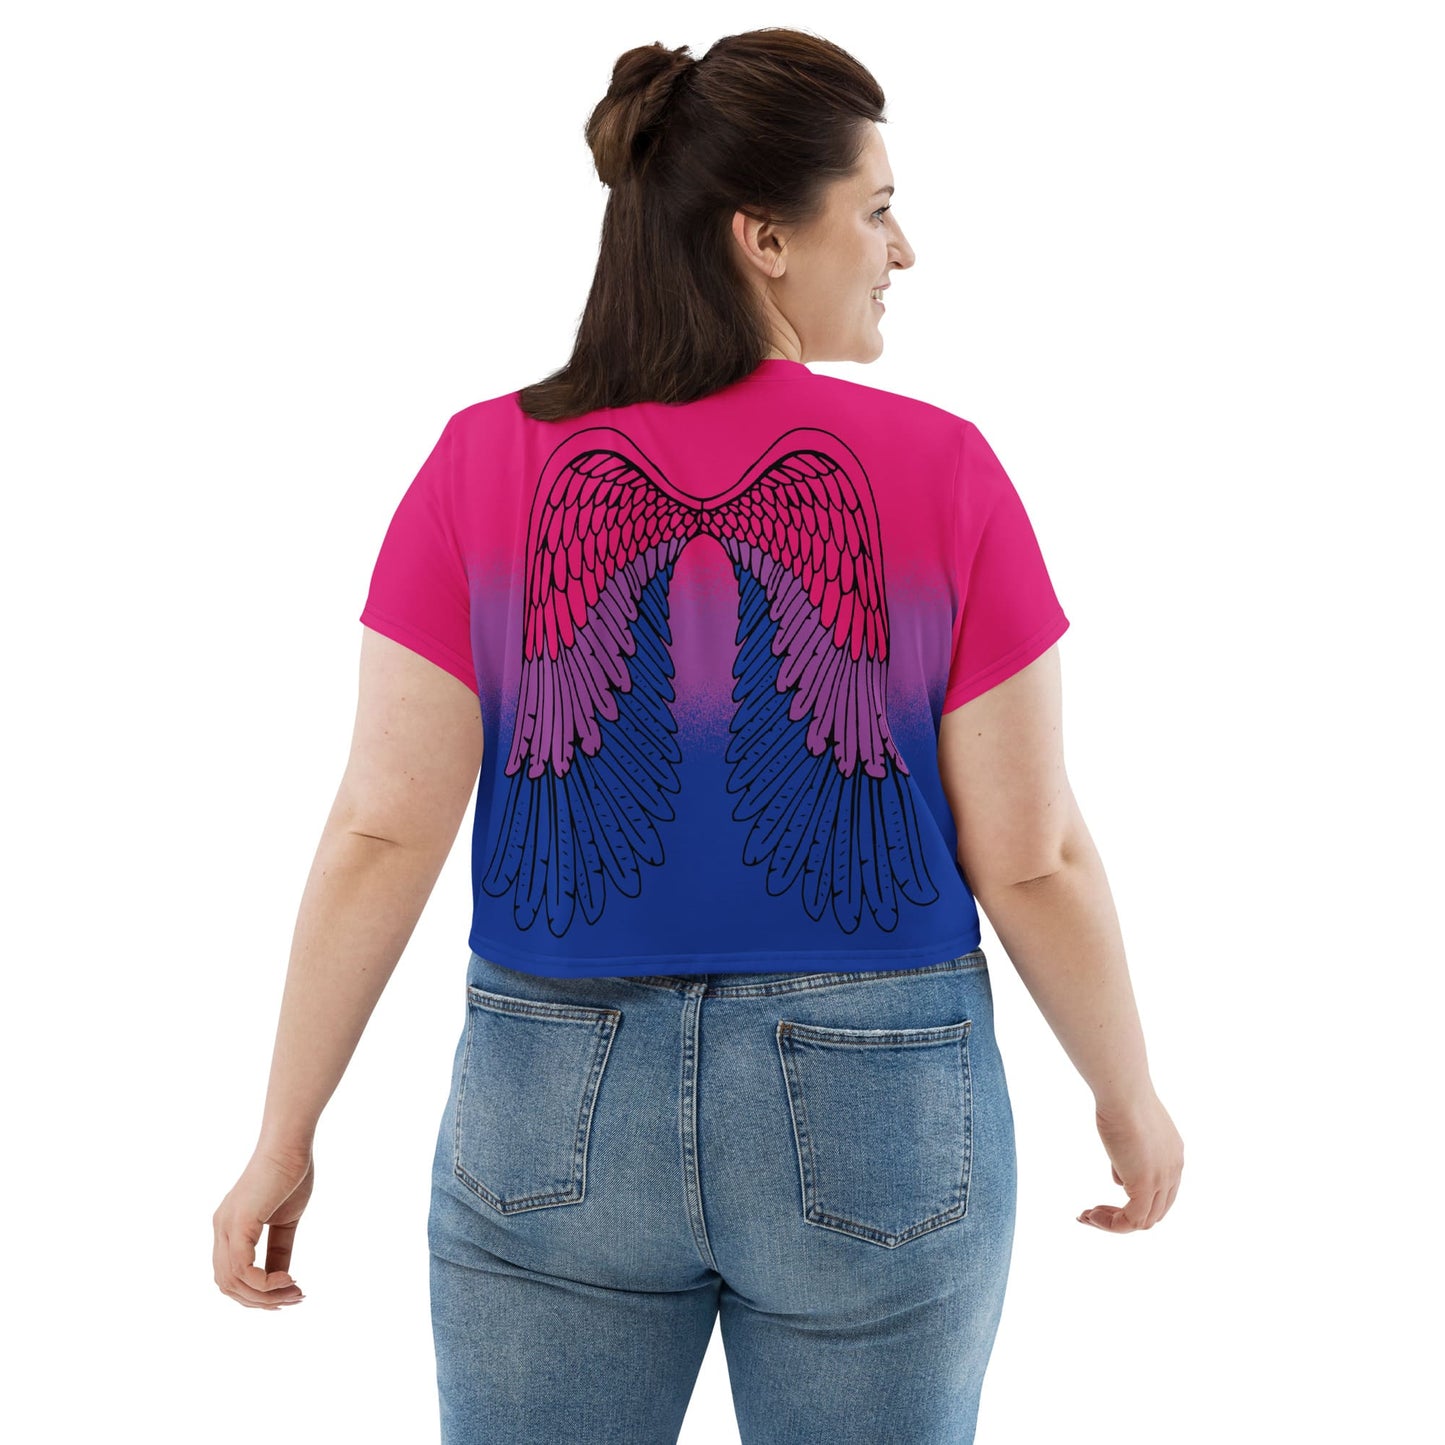 bisexual crop top, bi pride cropped shirt with wings on back, back